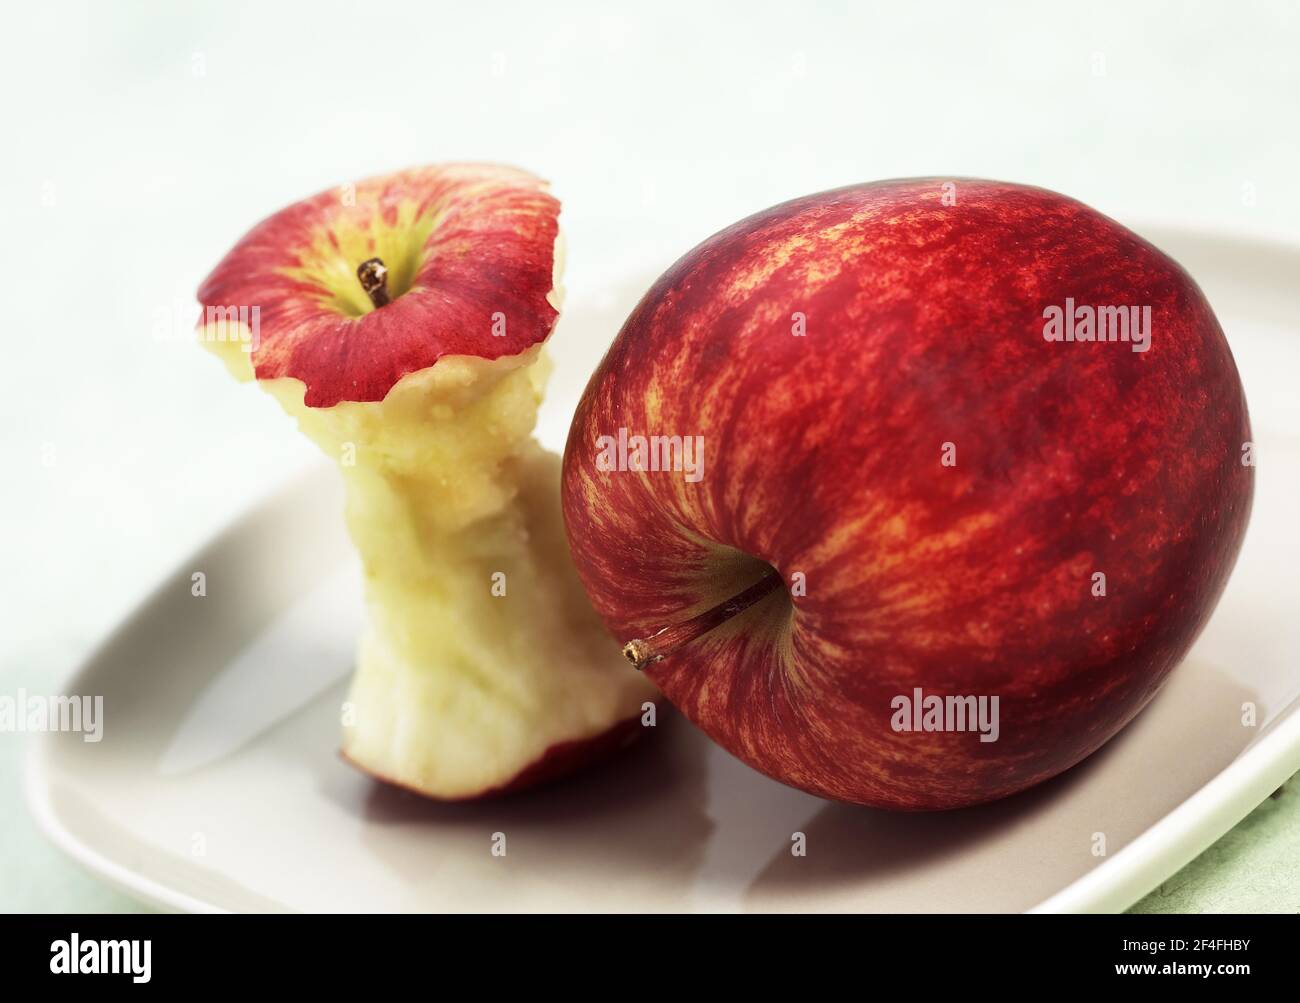 Malus domestica, kultivierter Apfel (Malus domestica), Apfel, Äpfel, Rosaceae, Royal Gala Apple, malus domestica und Kern in einer Plate, kultivierter Apfel Stockfoto